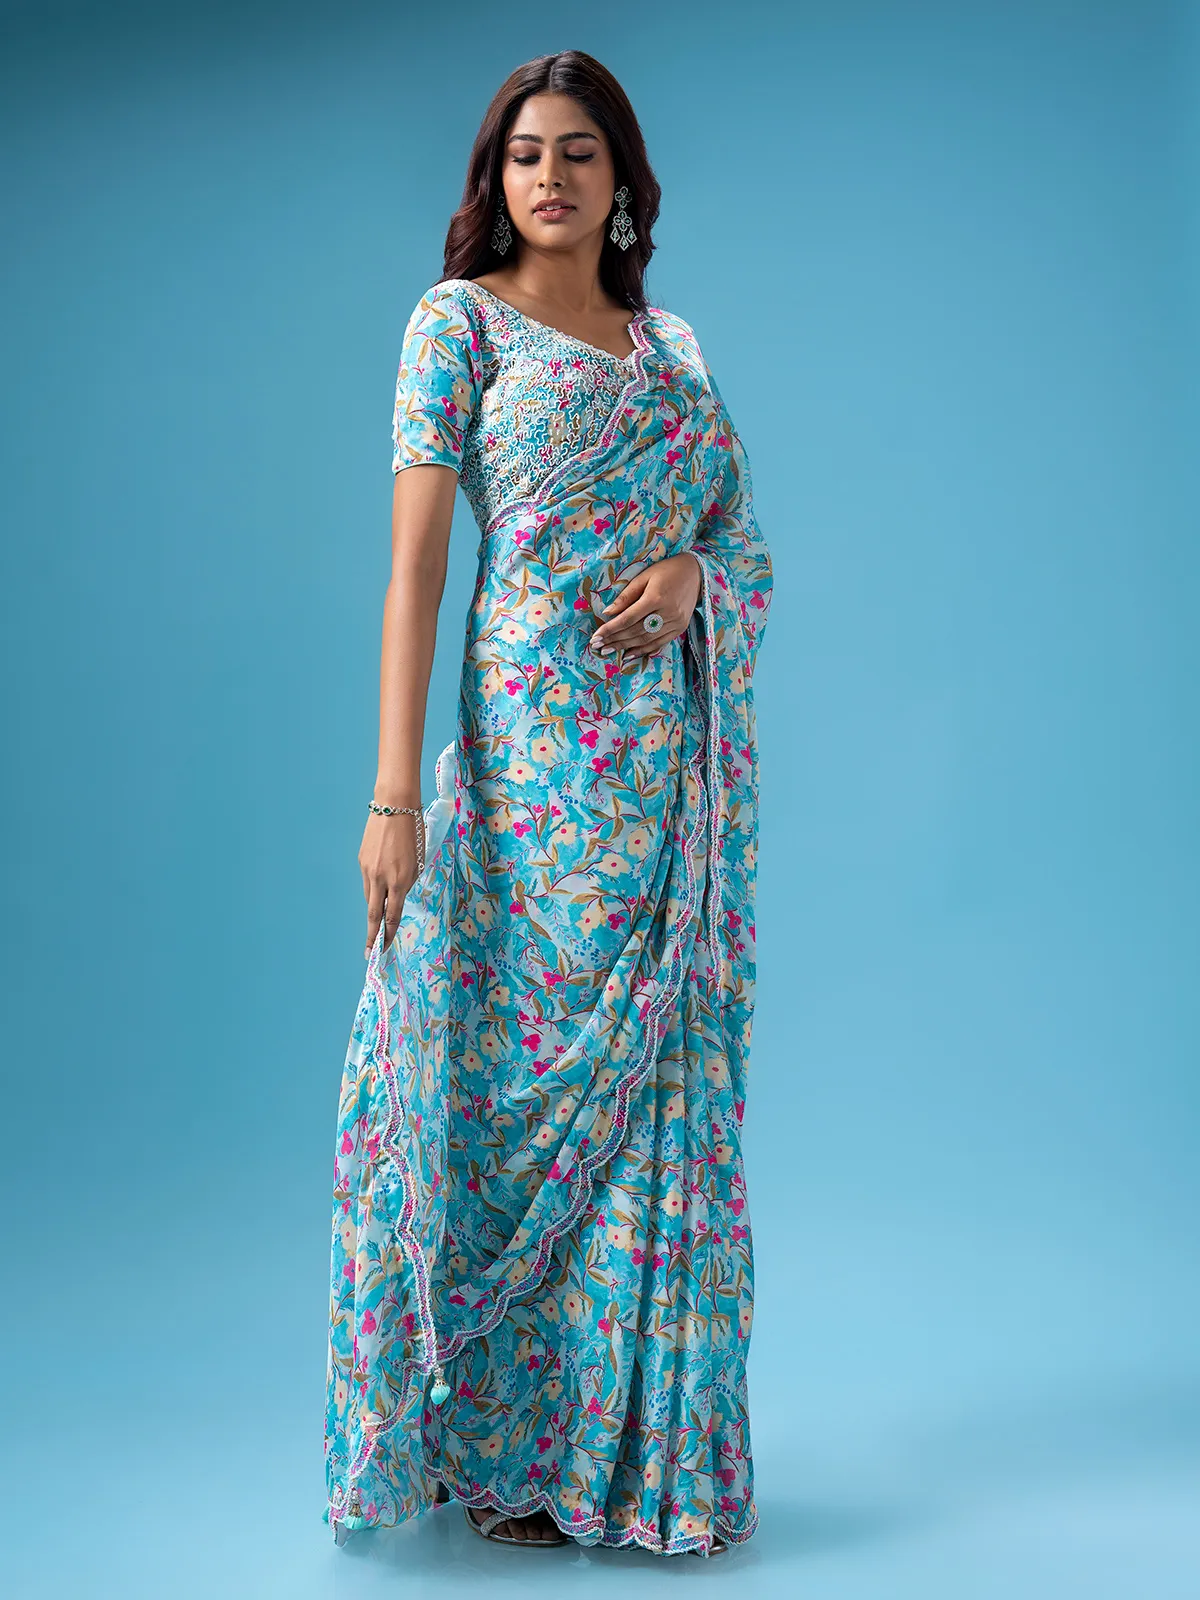 Stunning sky blue mashru silk saree